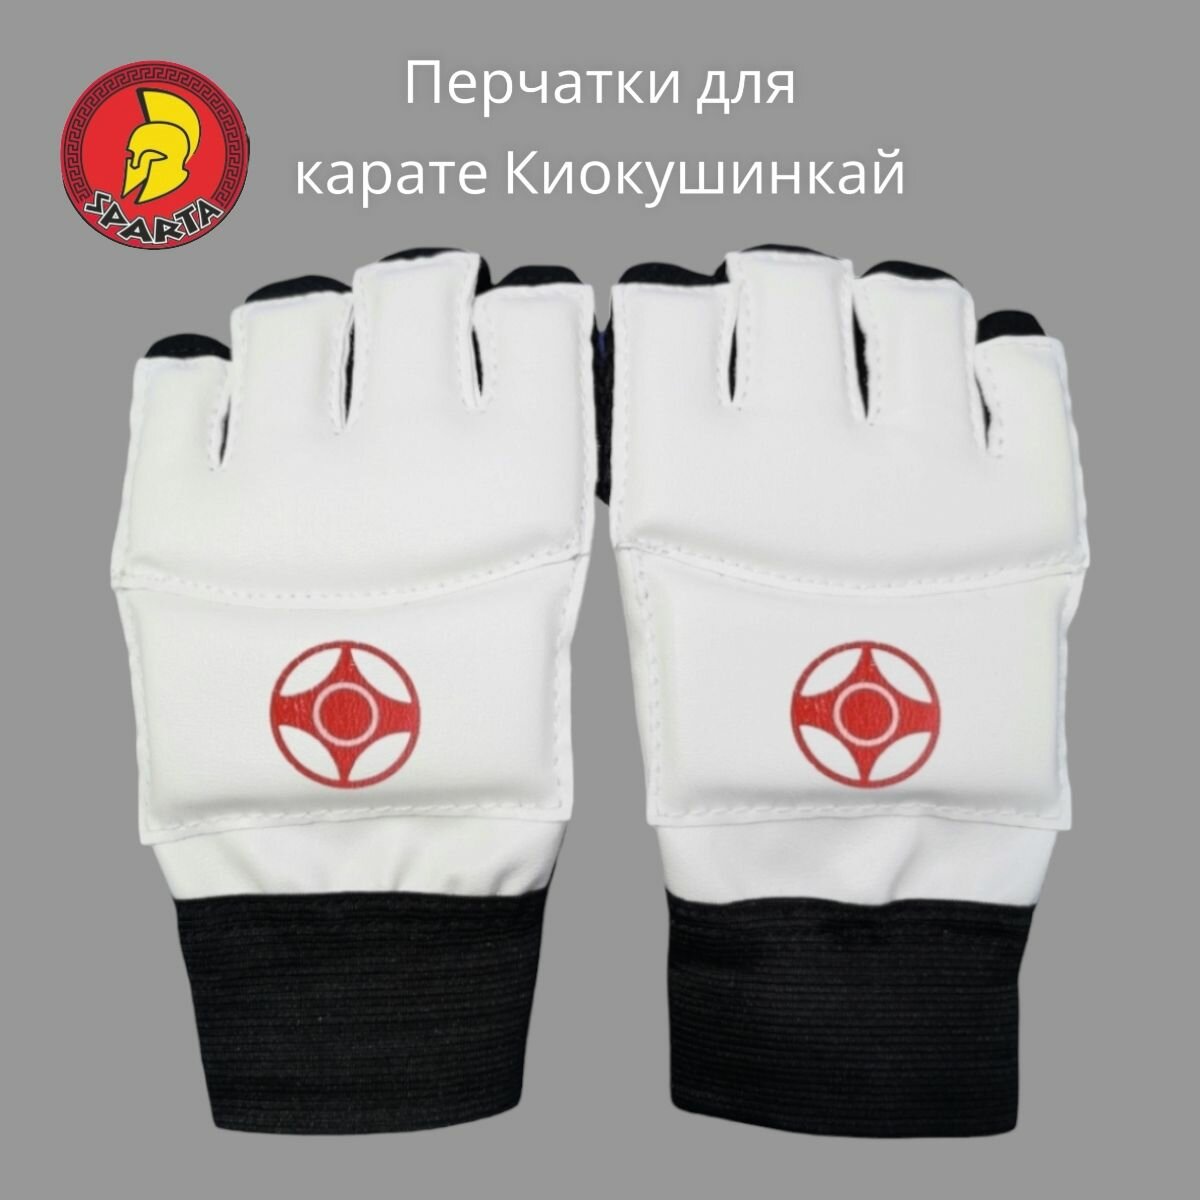 Перчатки для карате Киокушинкай "Чемпион" р. S